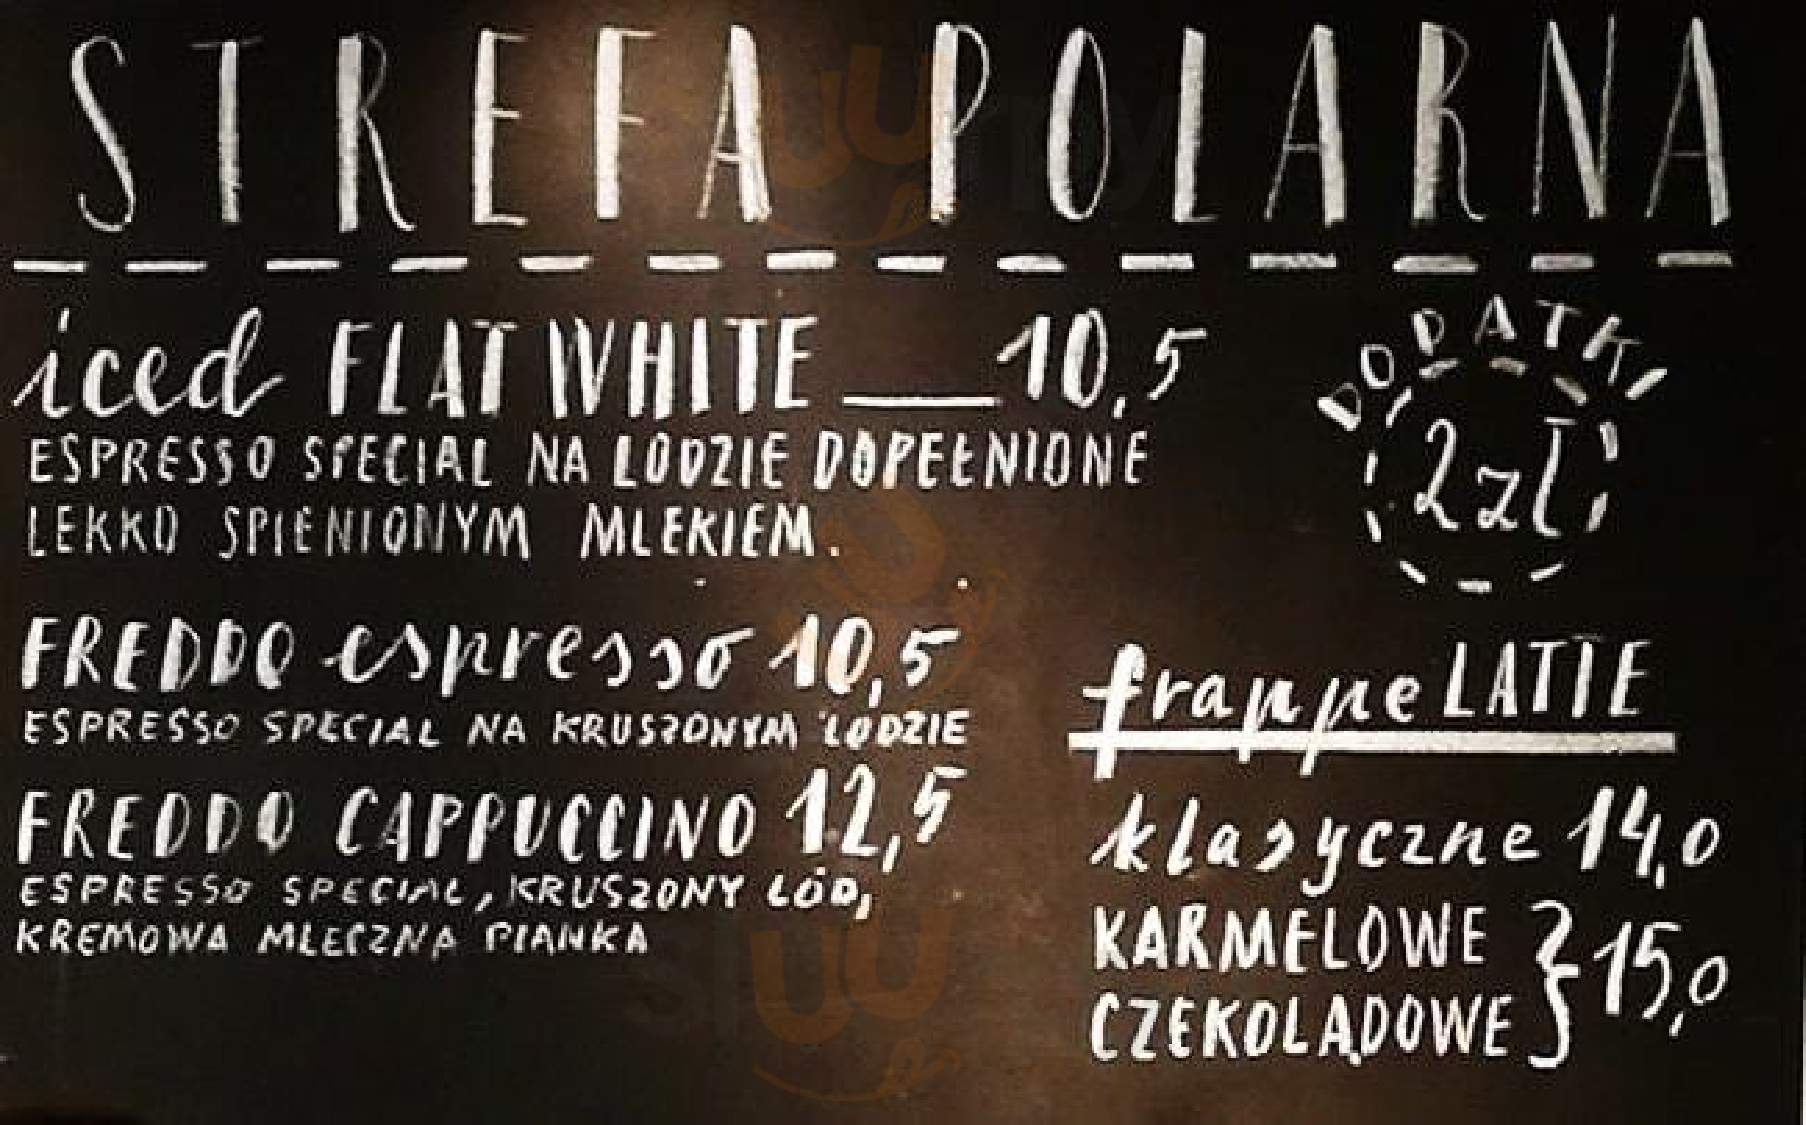 Green Cafe Nero Warszawa Menu - 1